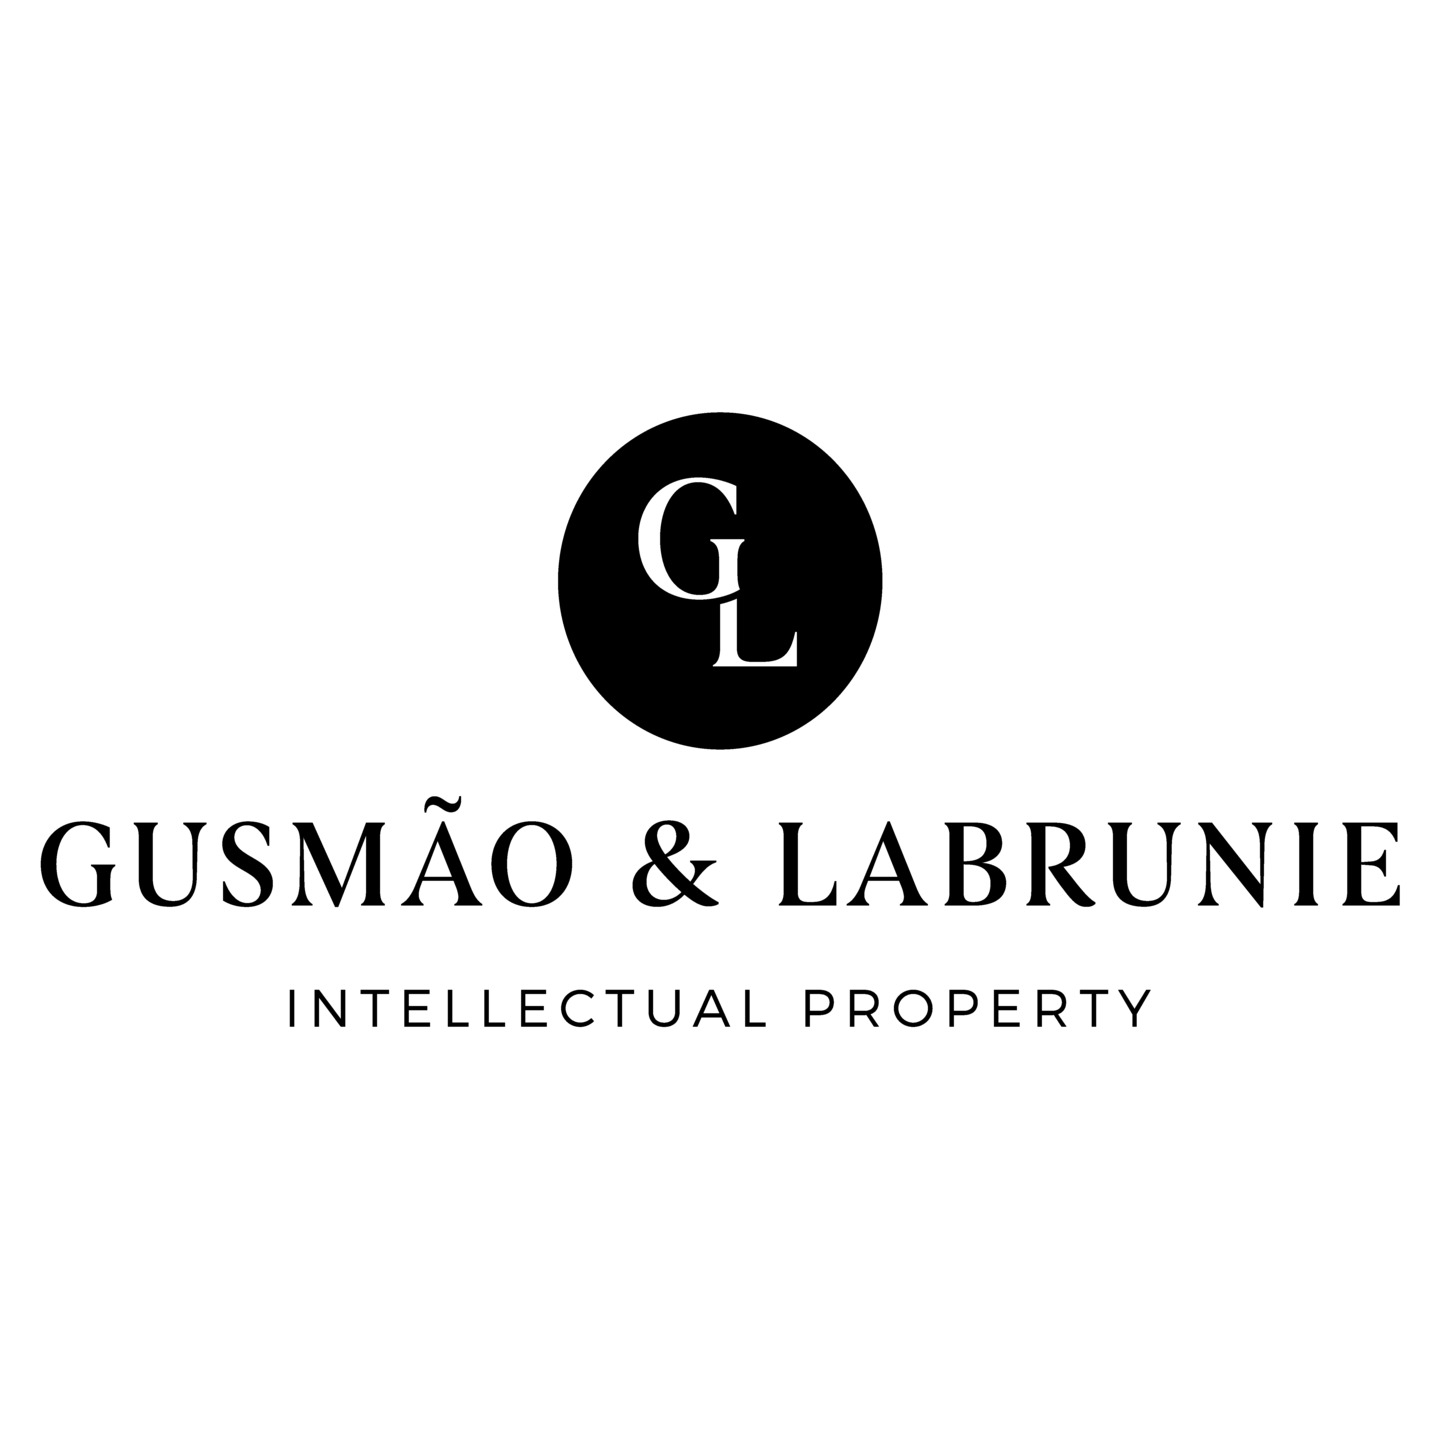 Gusmão & Labrunie - Intellectual Property